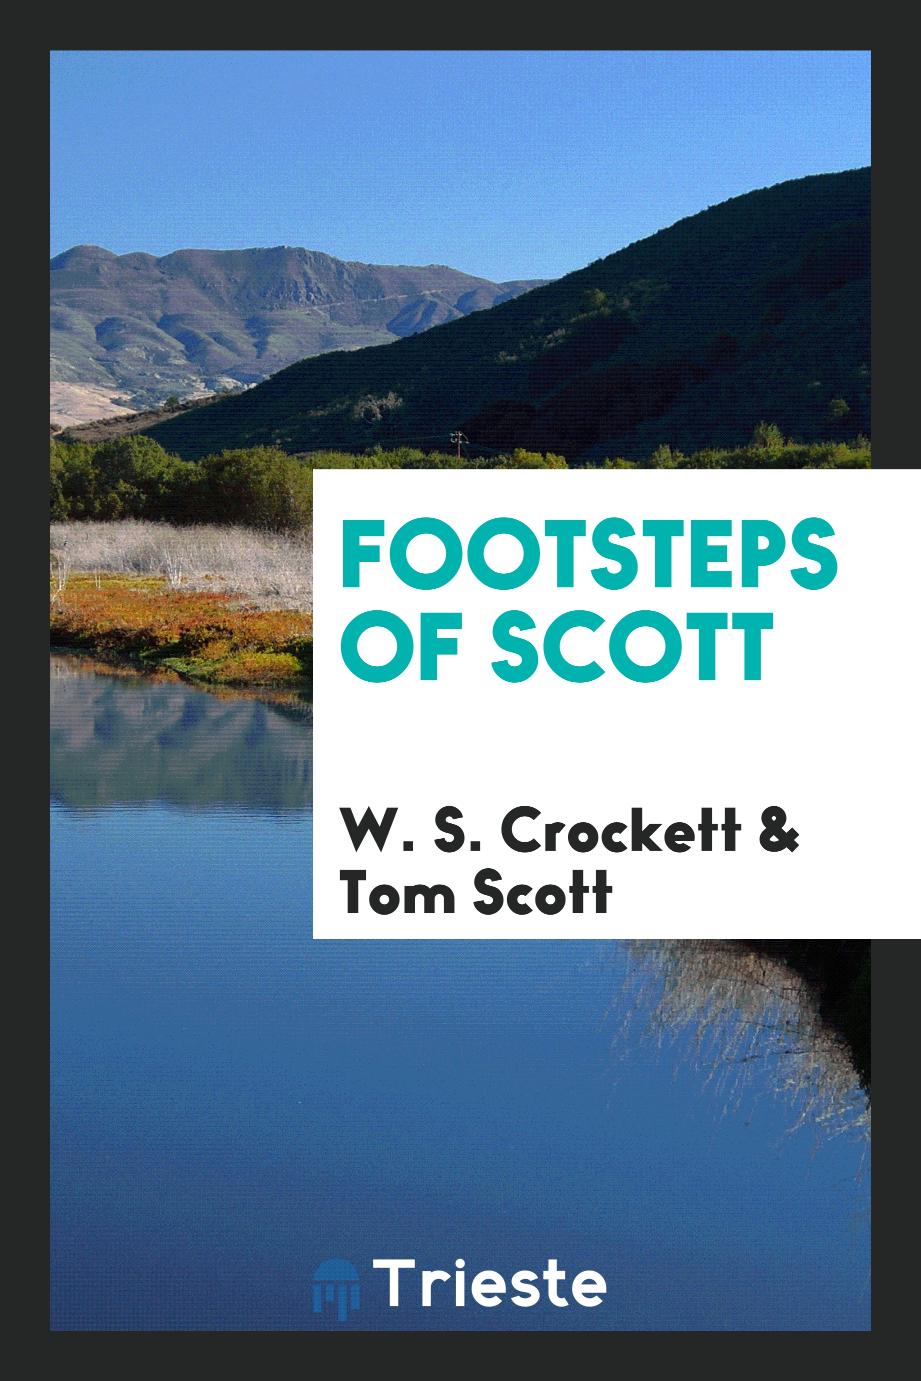 Footsteps of Scott